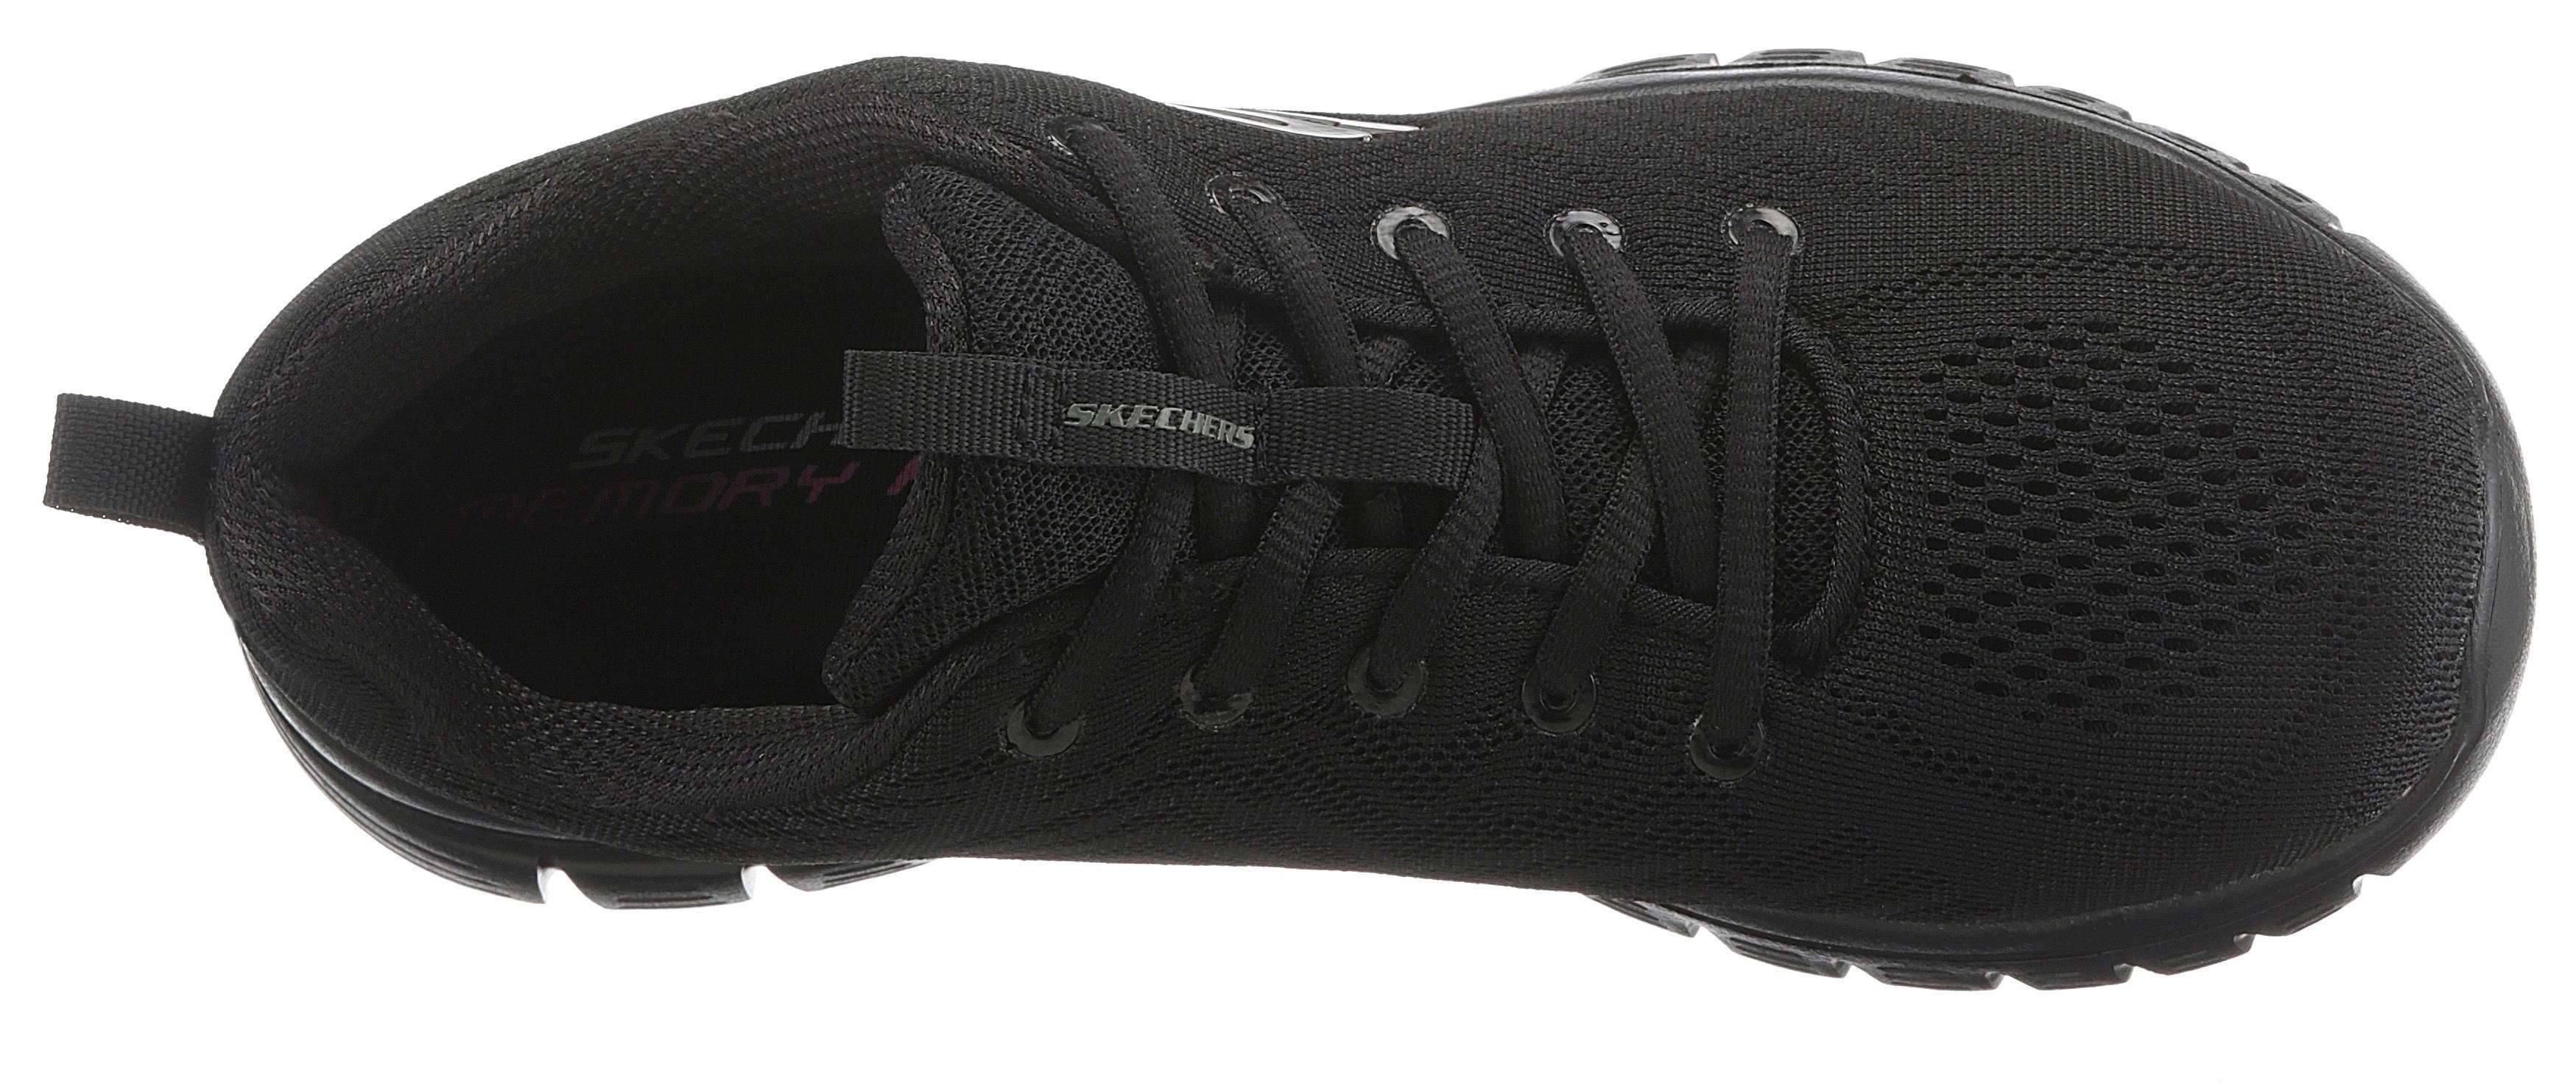 Graceful Skechers Memory - Sneaker Dämpfung Get Connected durch mit Foam schwarz